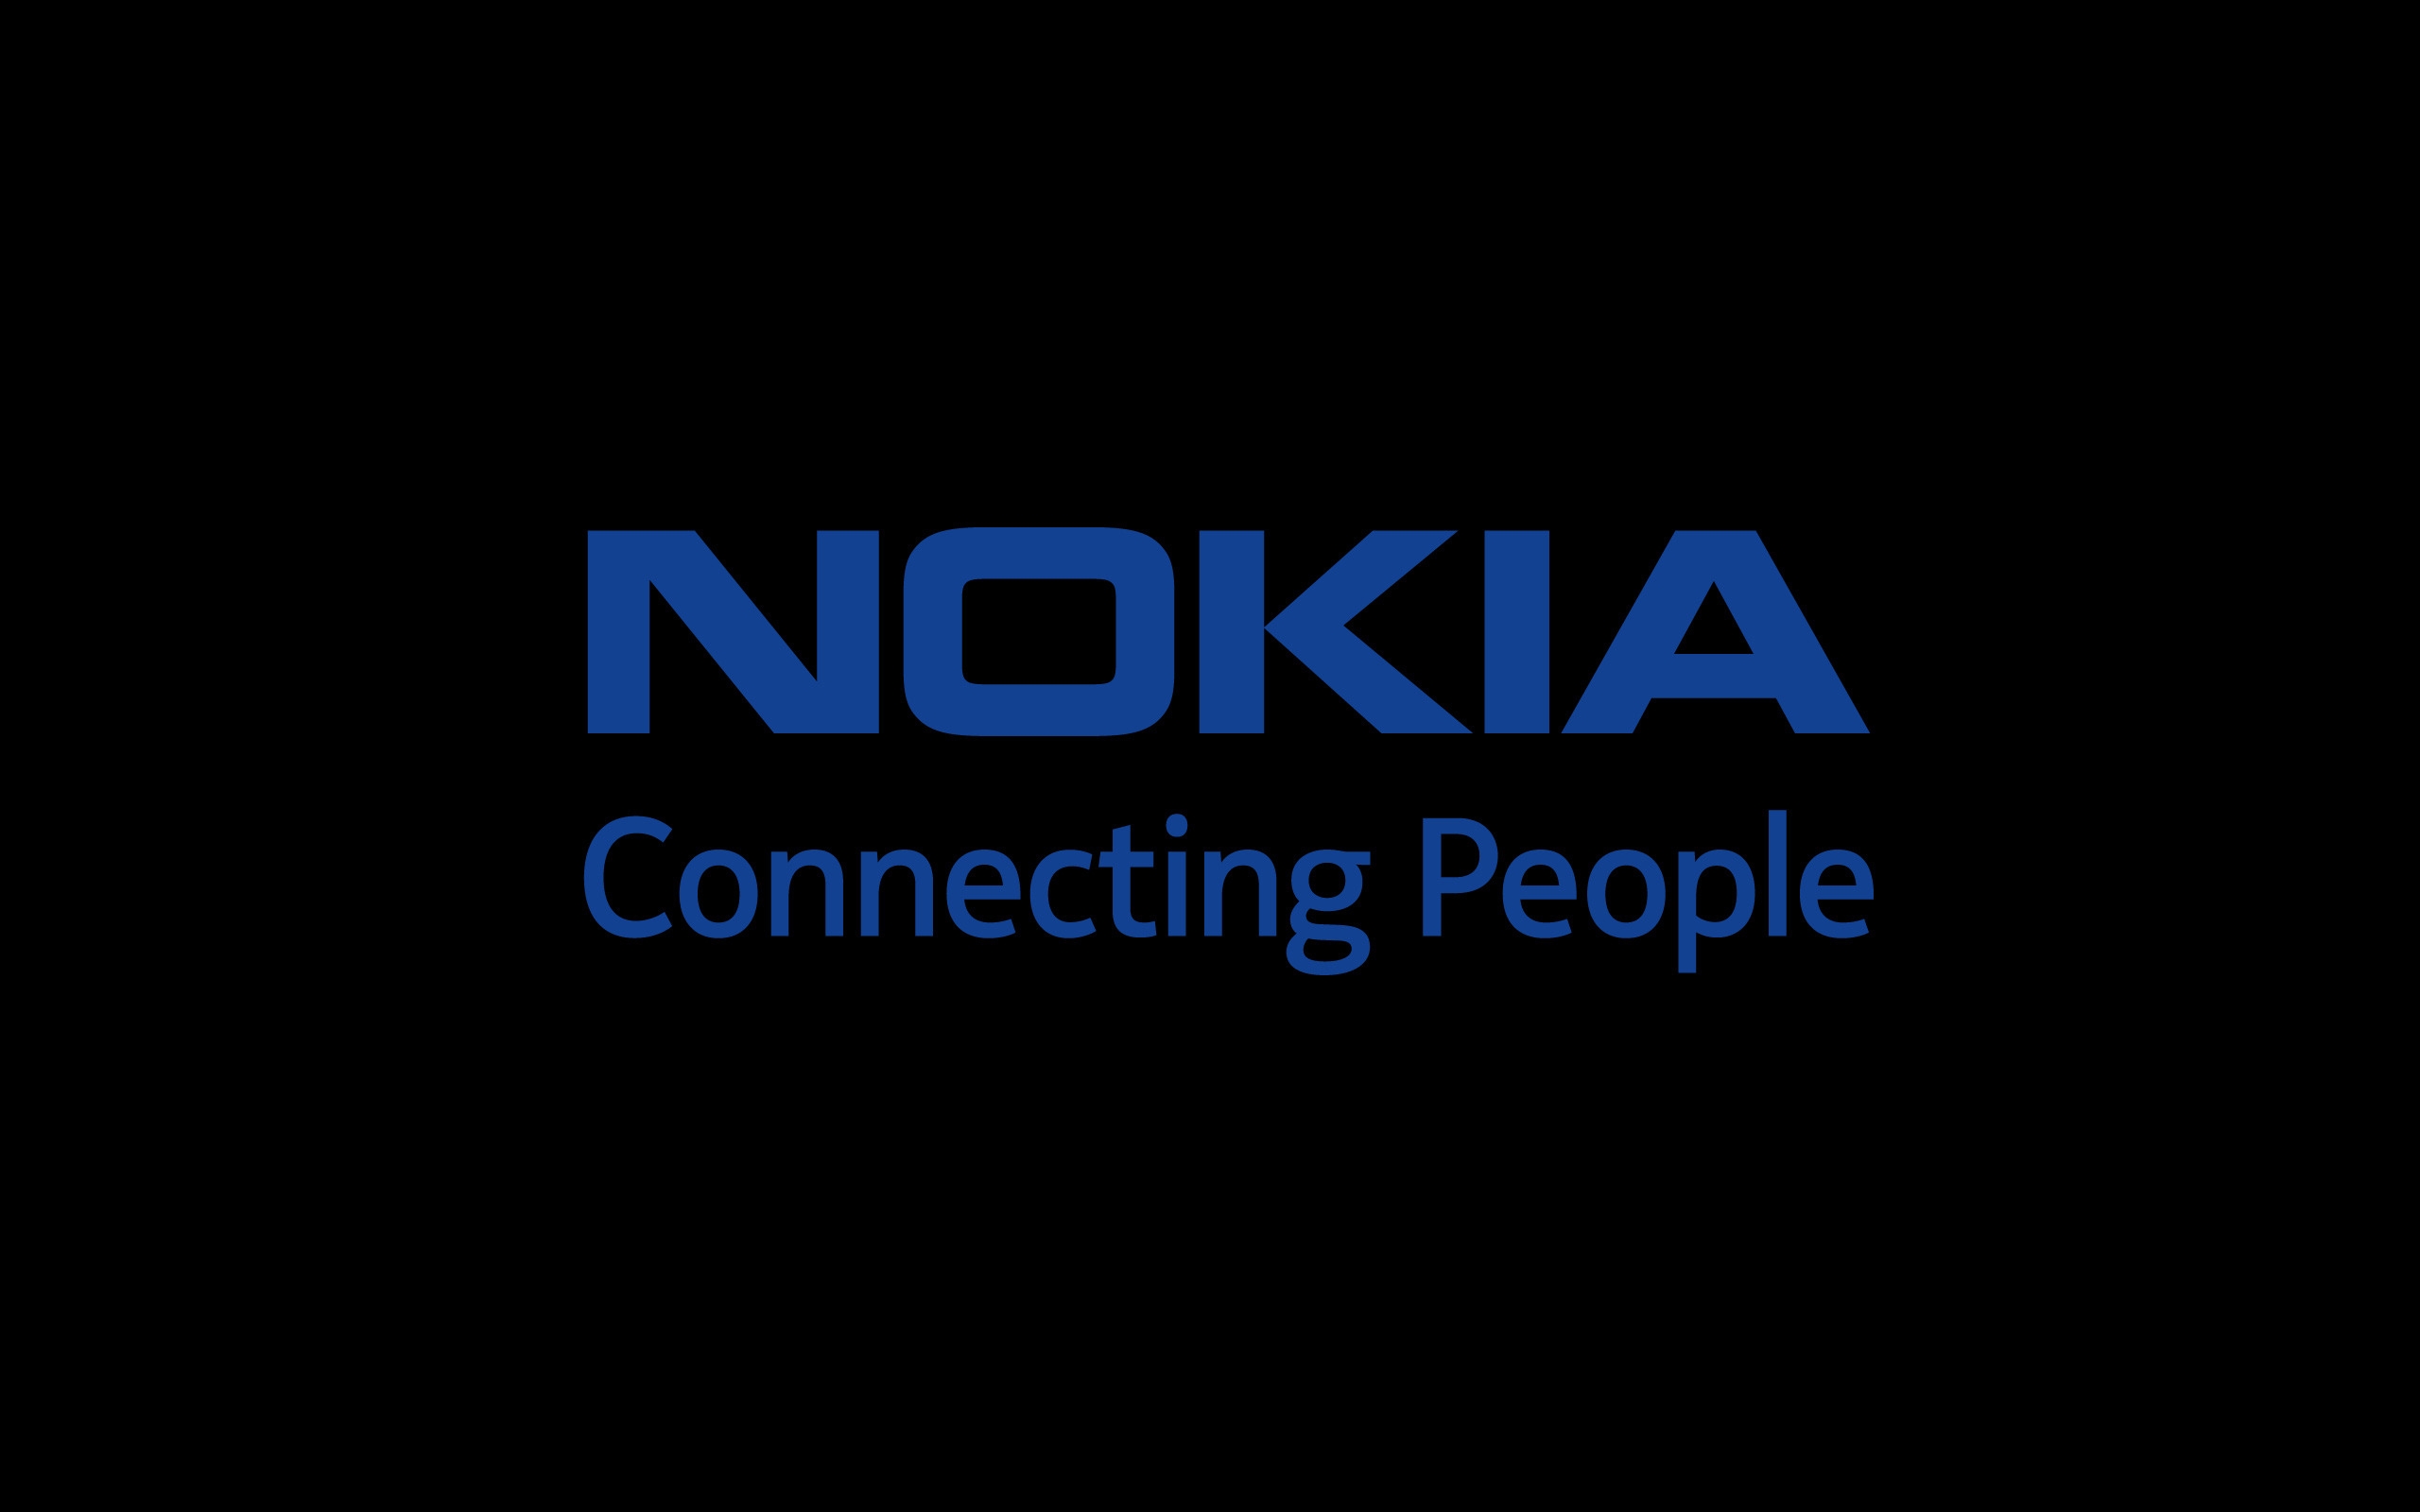 Nokia for 2560 x 1600 widescreen resolution